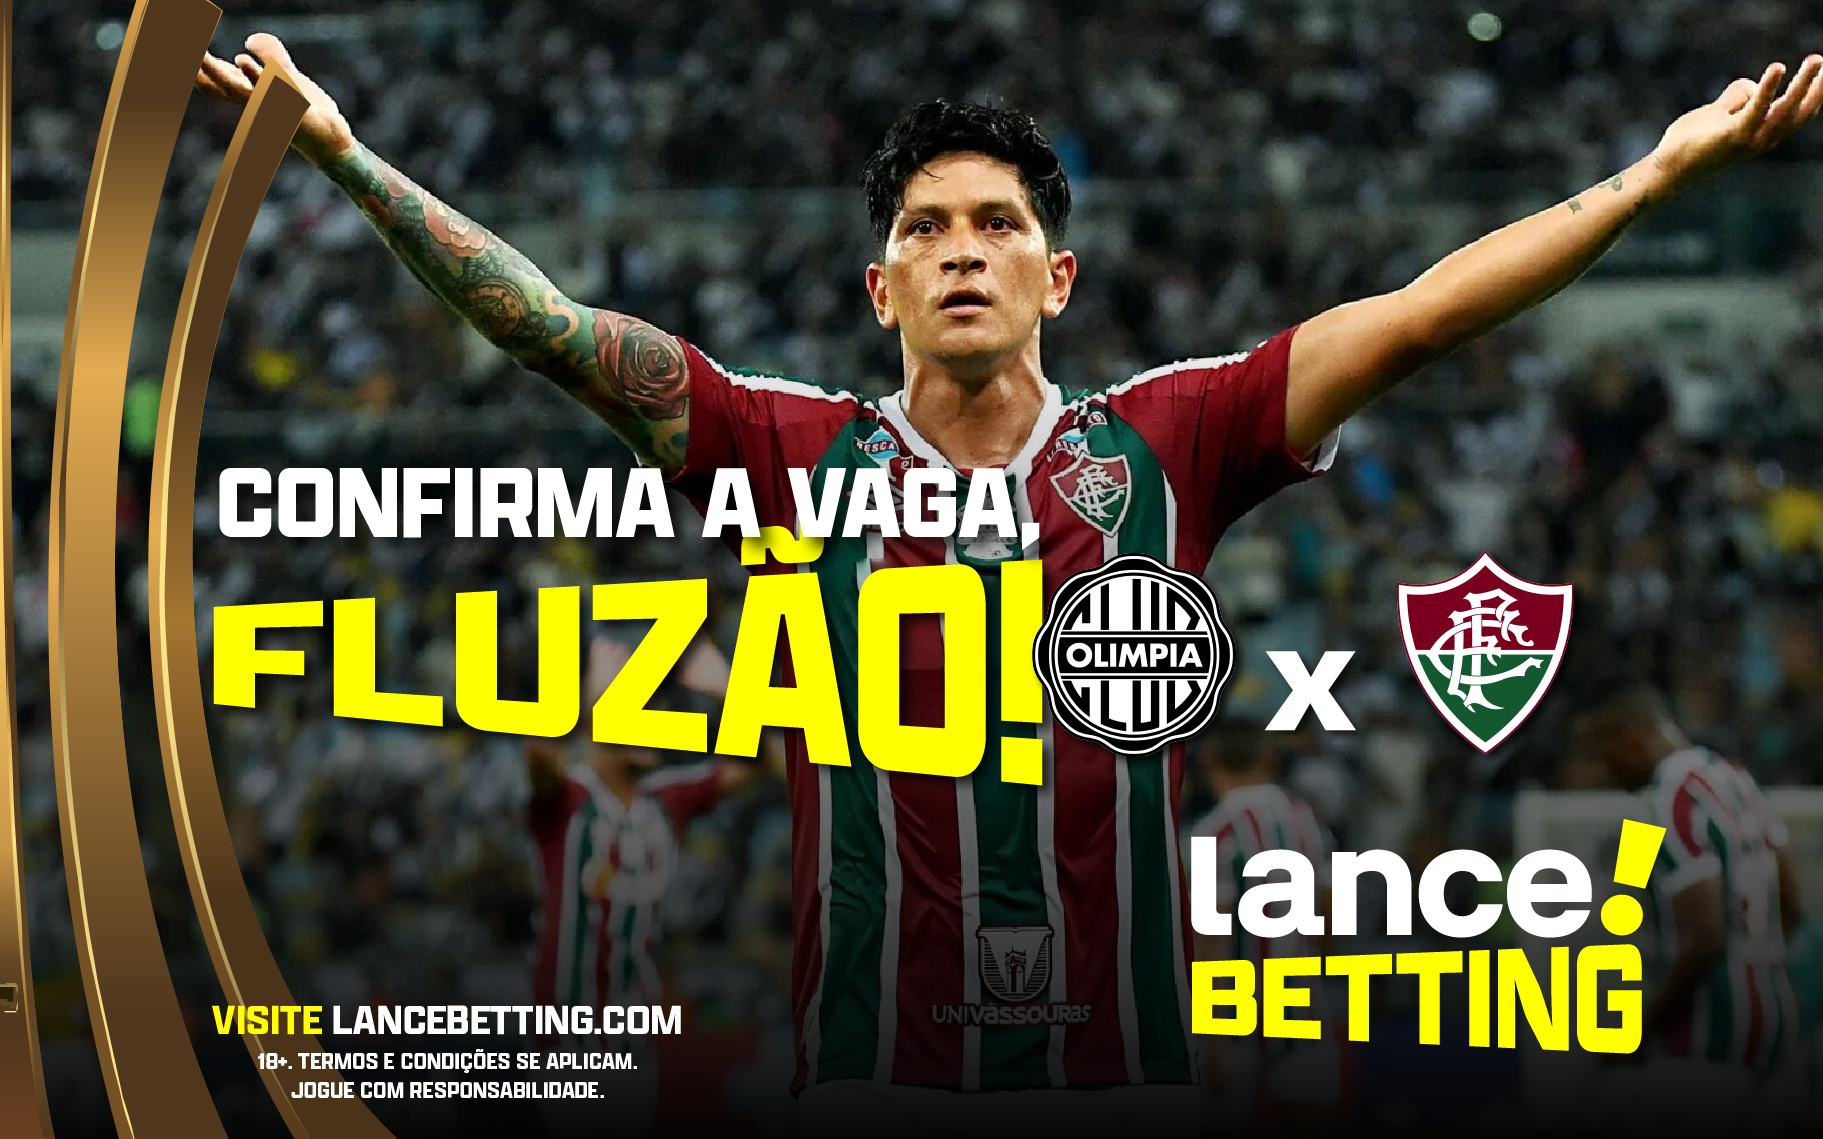 Lance Betting: Aposte R$10 na Libertadores e ganhe R$5